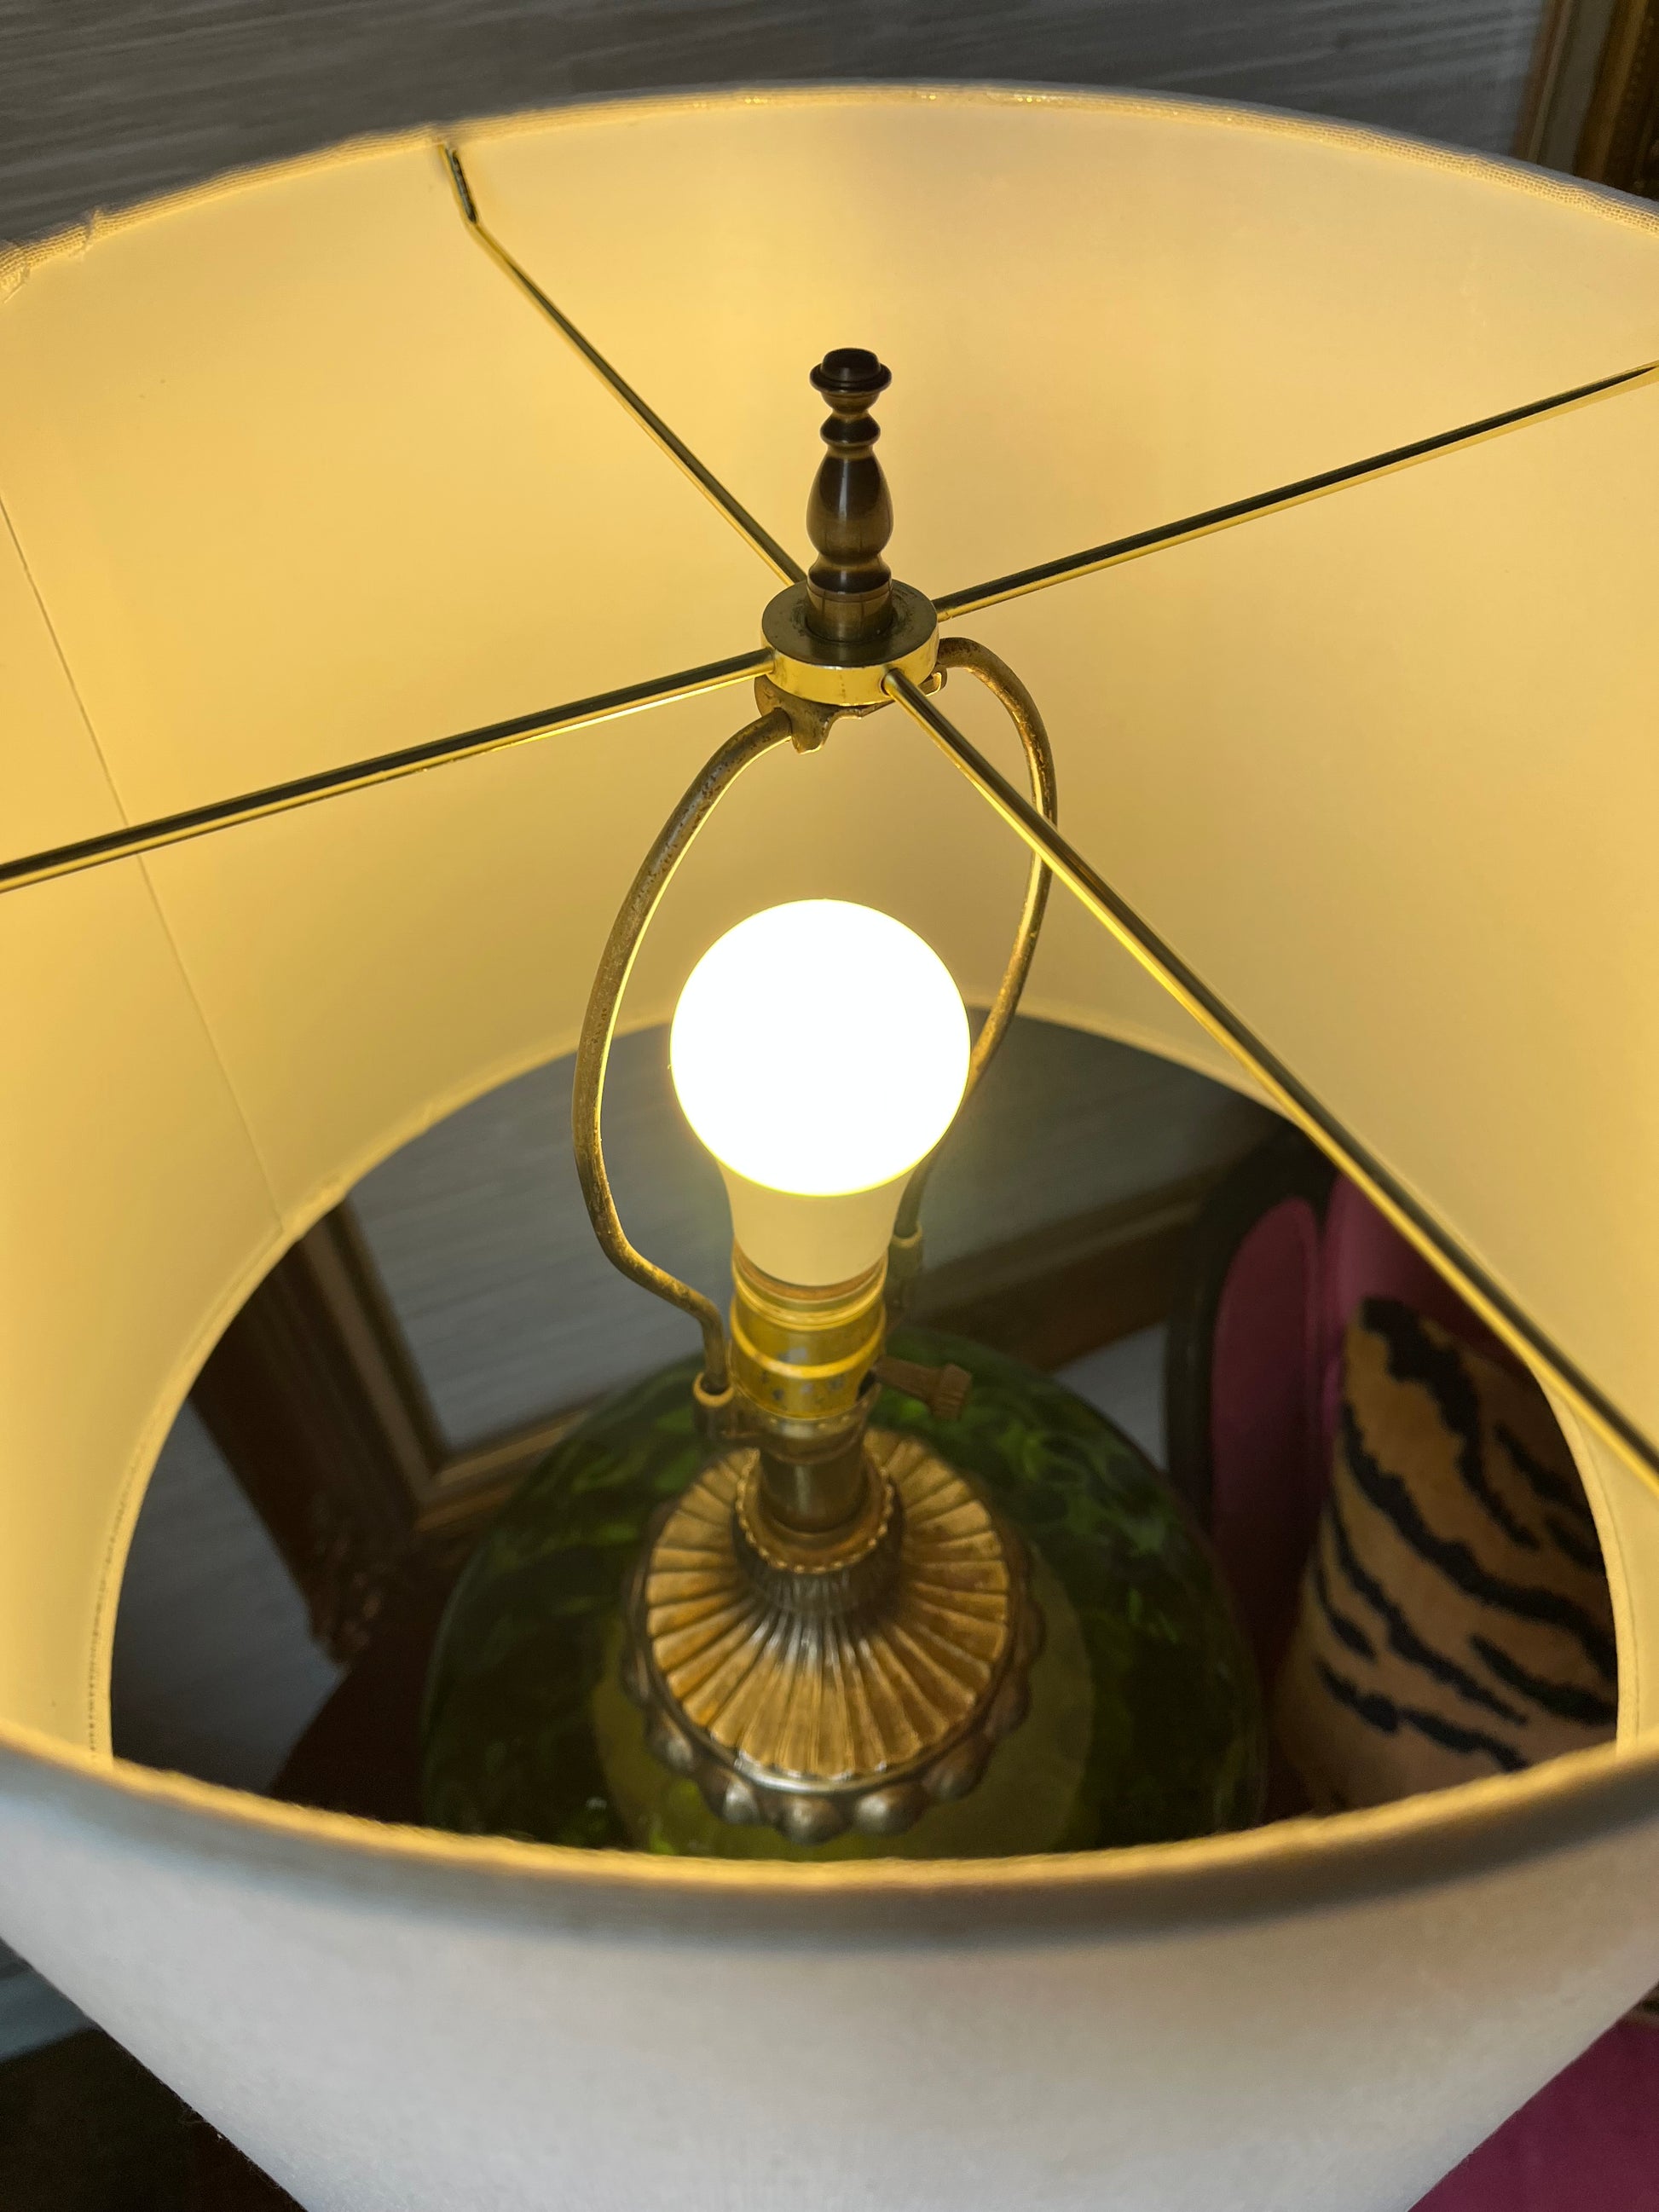 Brass Desk Lamp With Green Glass Shade Italian Art Deco